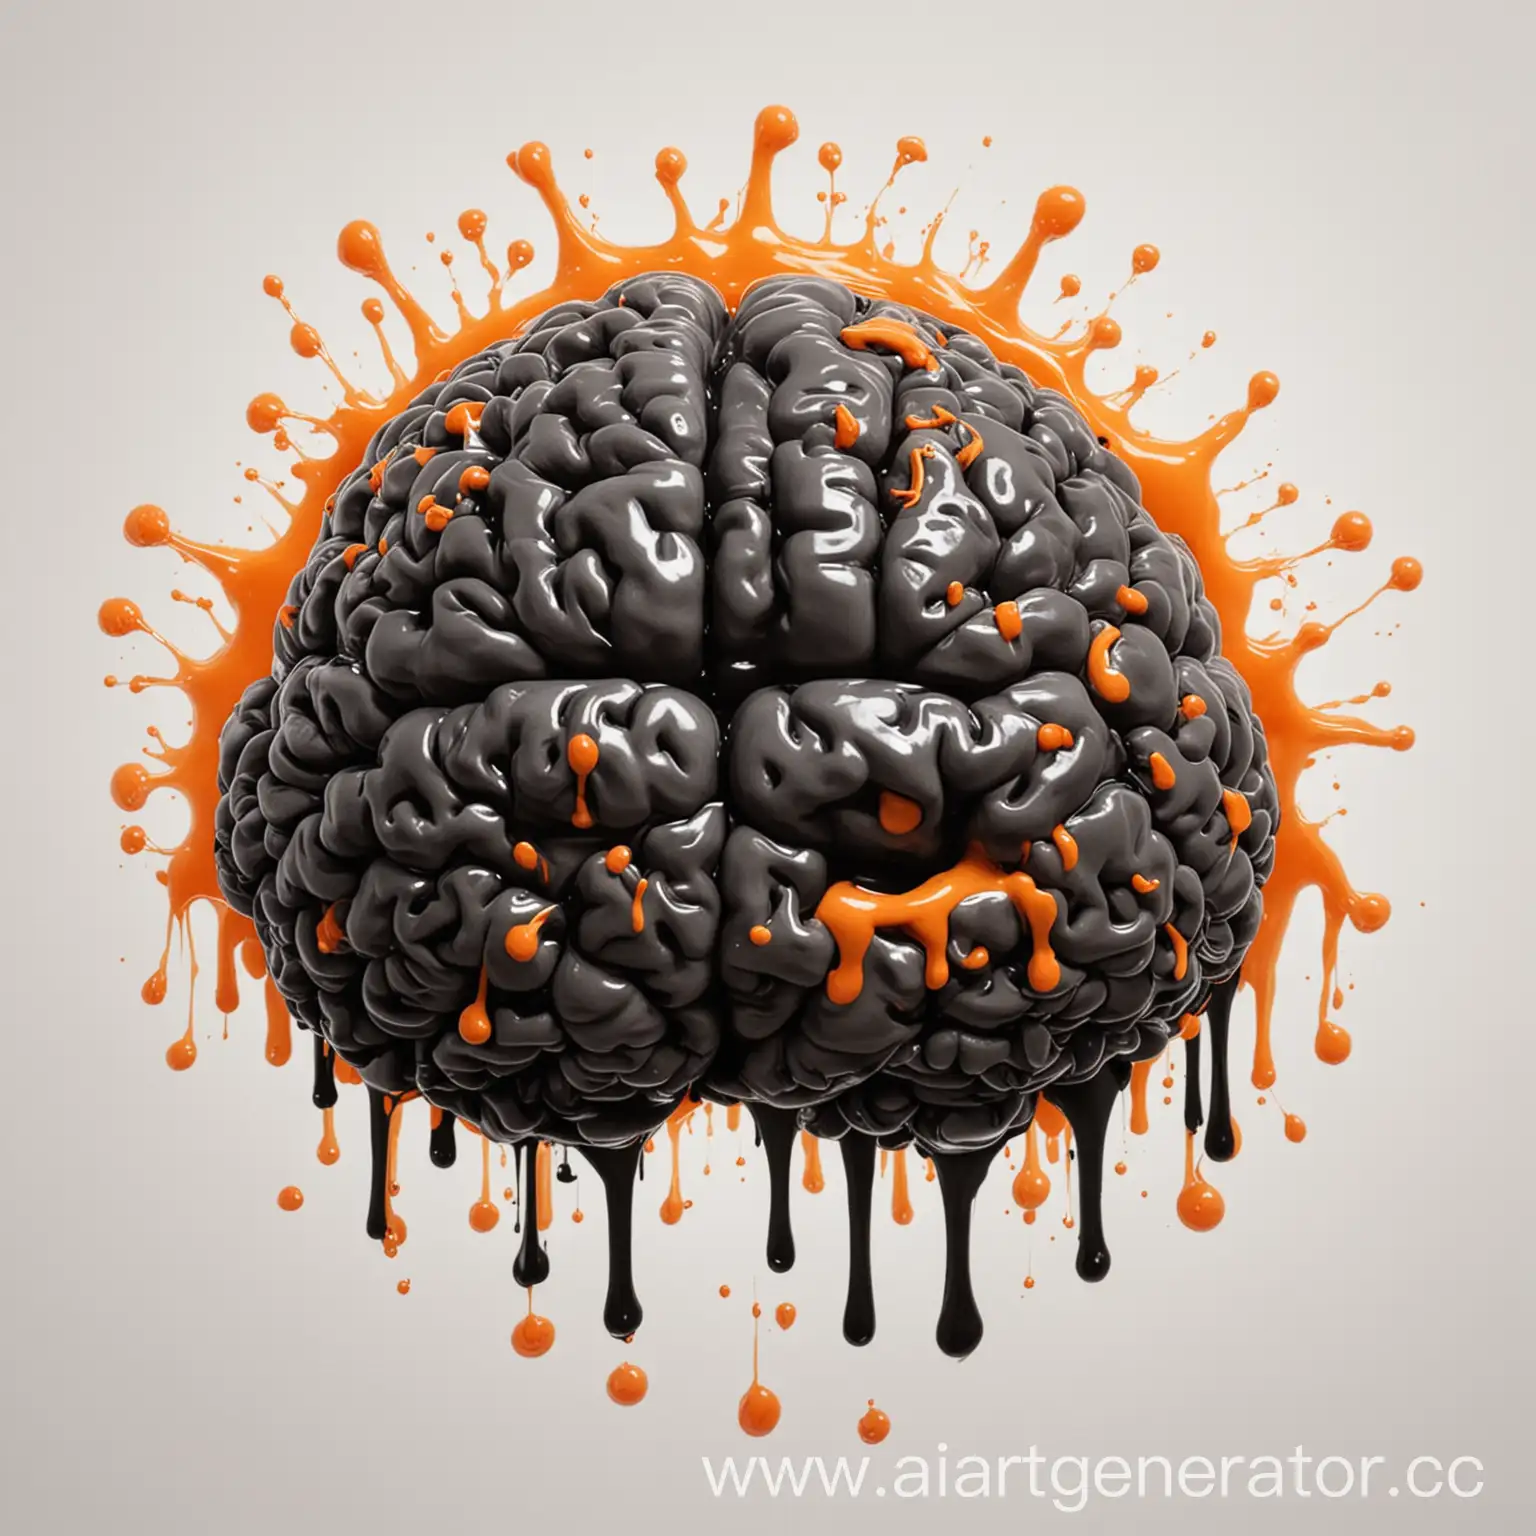 Abstract-Black-Brain-with-Exuding-Orange-Slime-on-White-Background